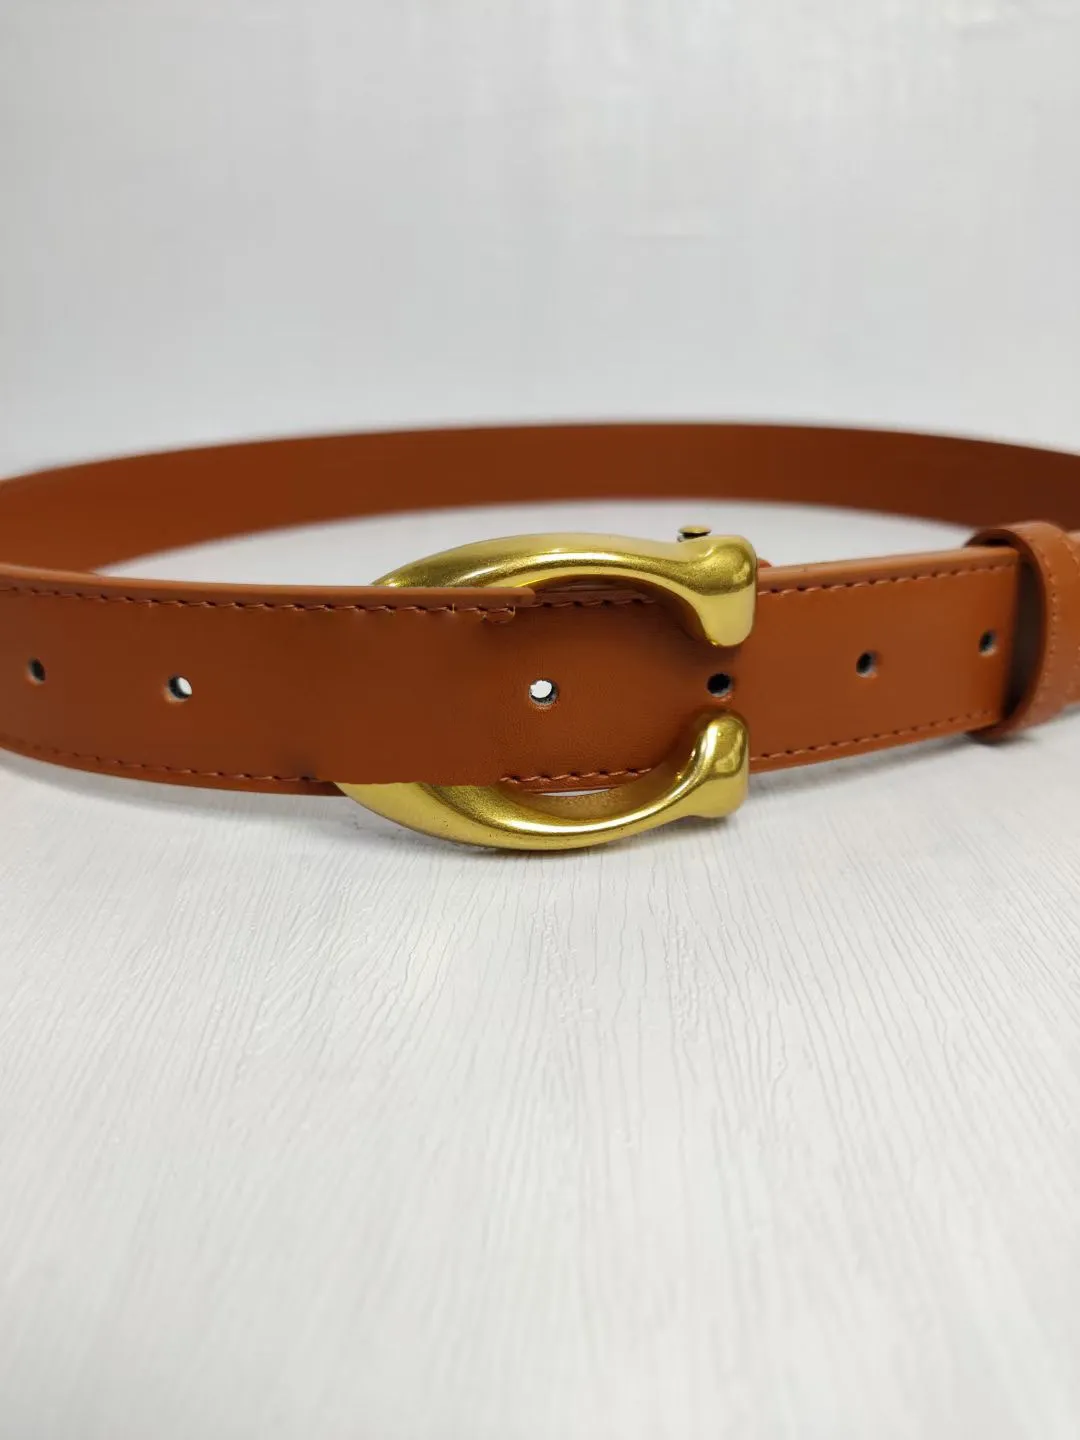 Designer Women Belt leathers 3 0cm wide C buckle Genuine Leather womens belts as birthday gift299f